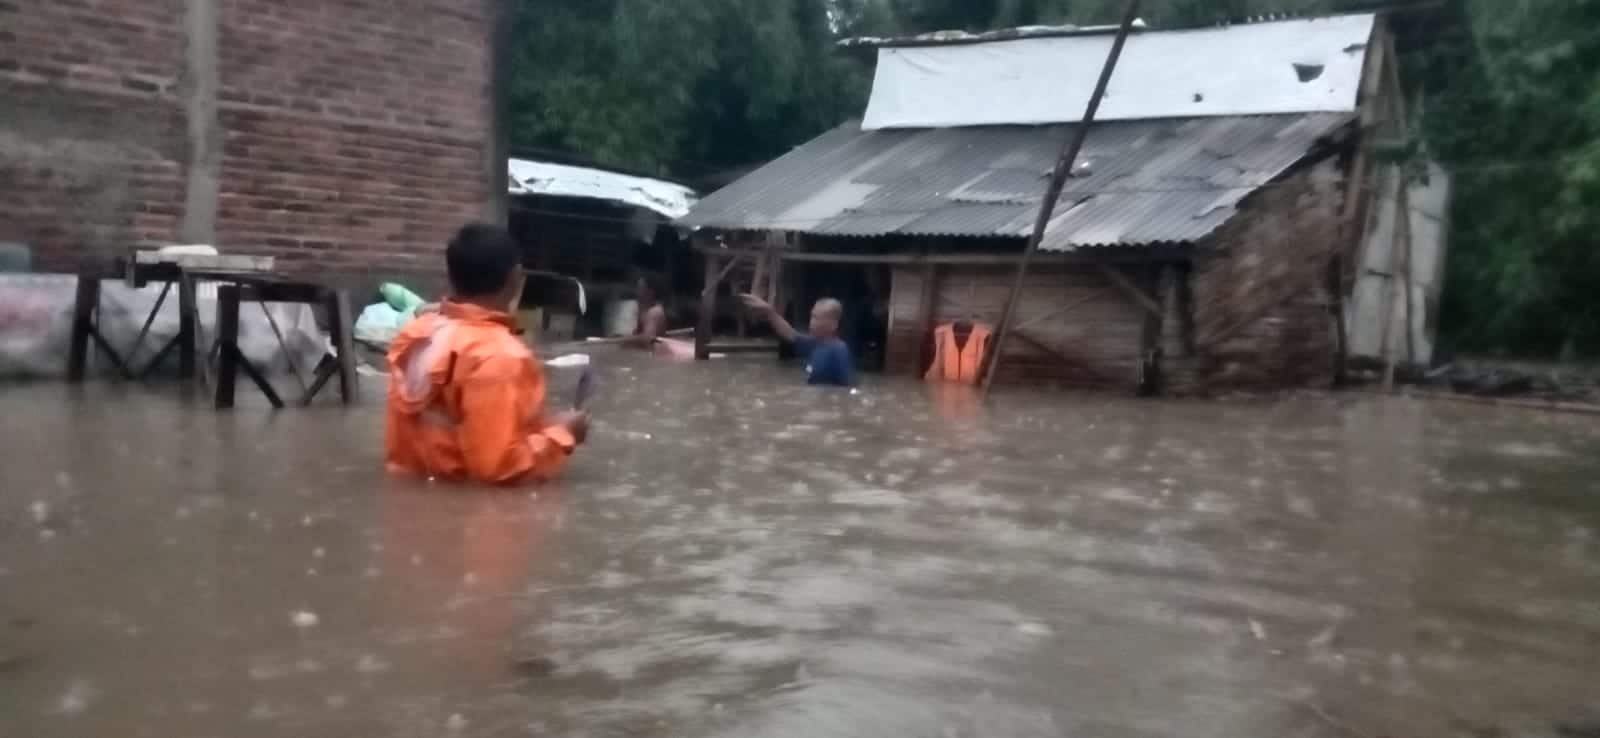 Banjir Kalijaga Kramat, Ketinggian Air Sepinggang, BPBD Kota Cirebon Terjunkan Perahu Karet